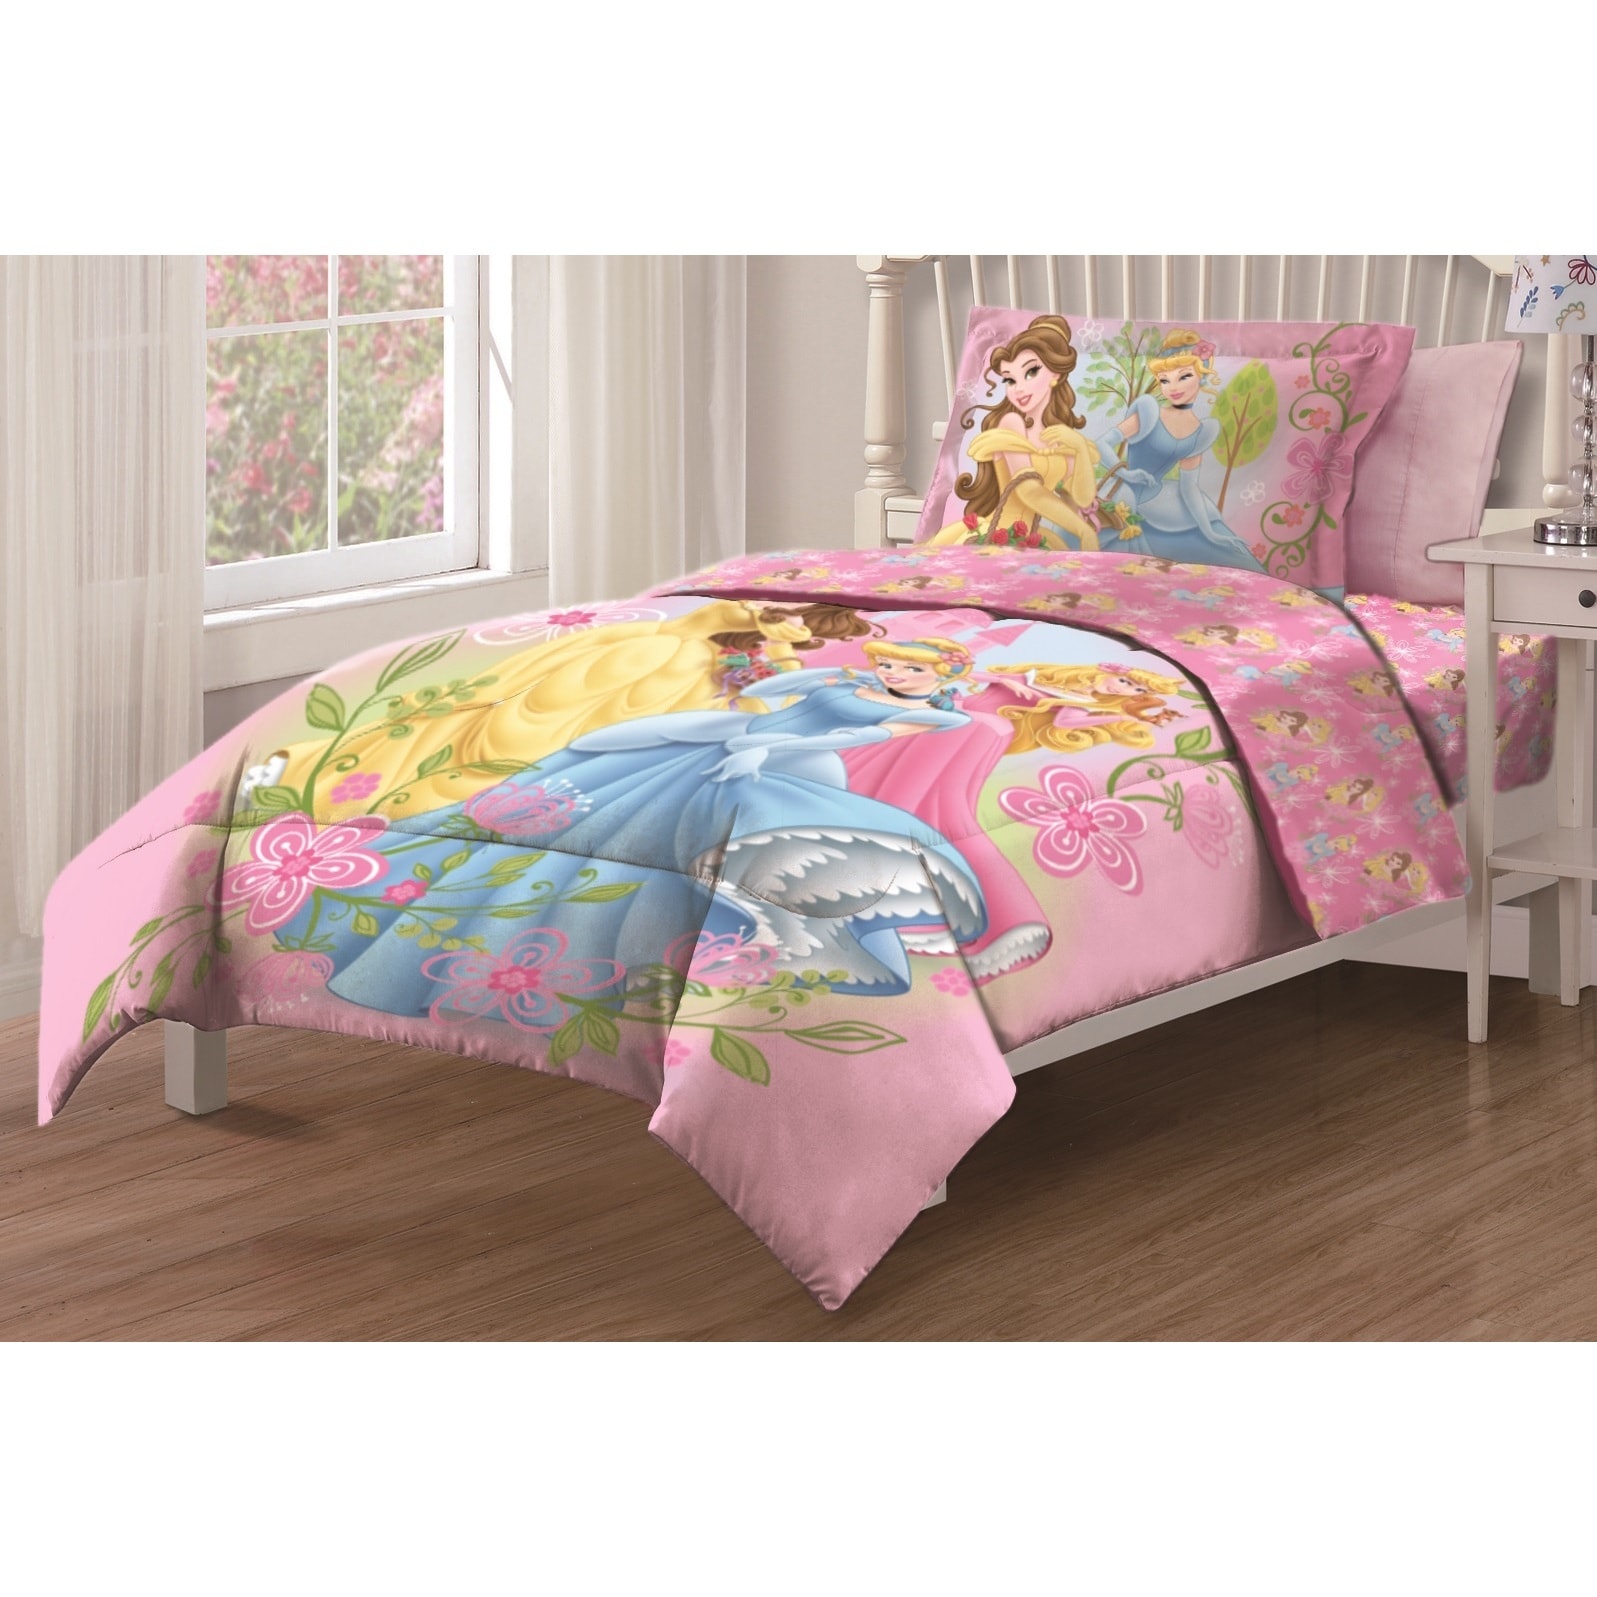 Disney Princess Royal Gardens Twin Size 3 Piece Comforter Set Overstock 9183274